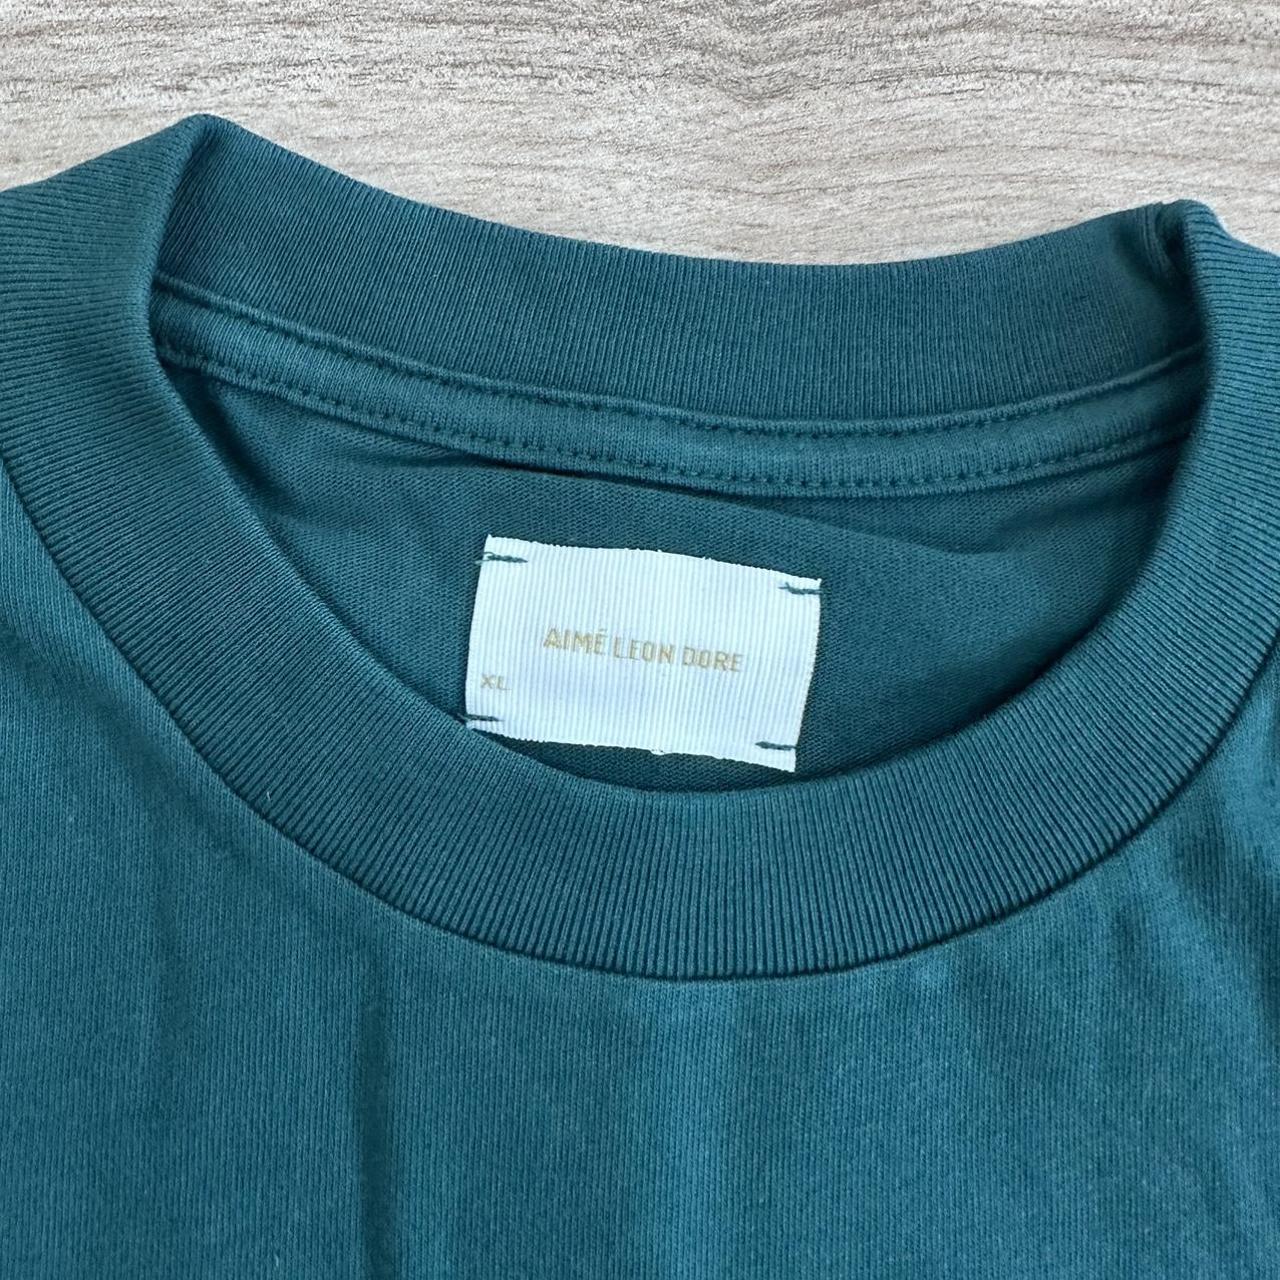 Aime Leon Dore Unisphere Tee Shirt Green Brand New!... - Depop